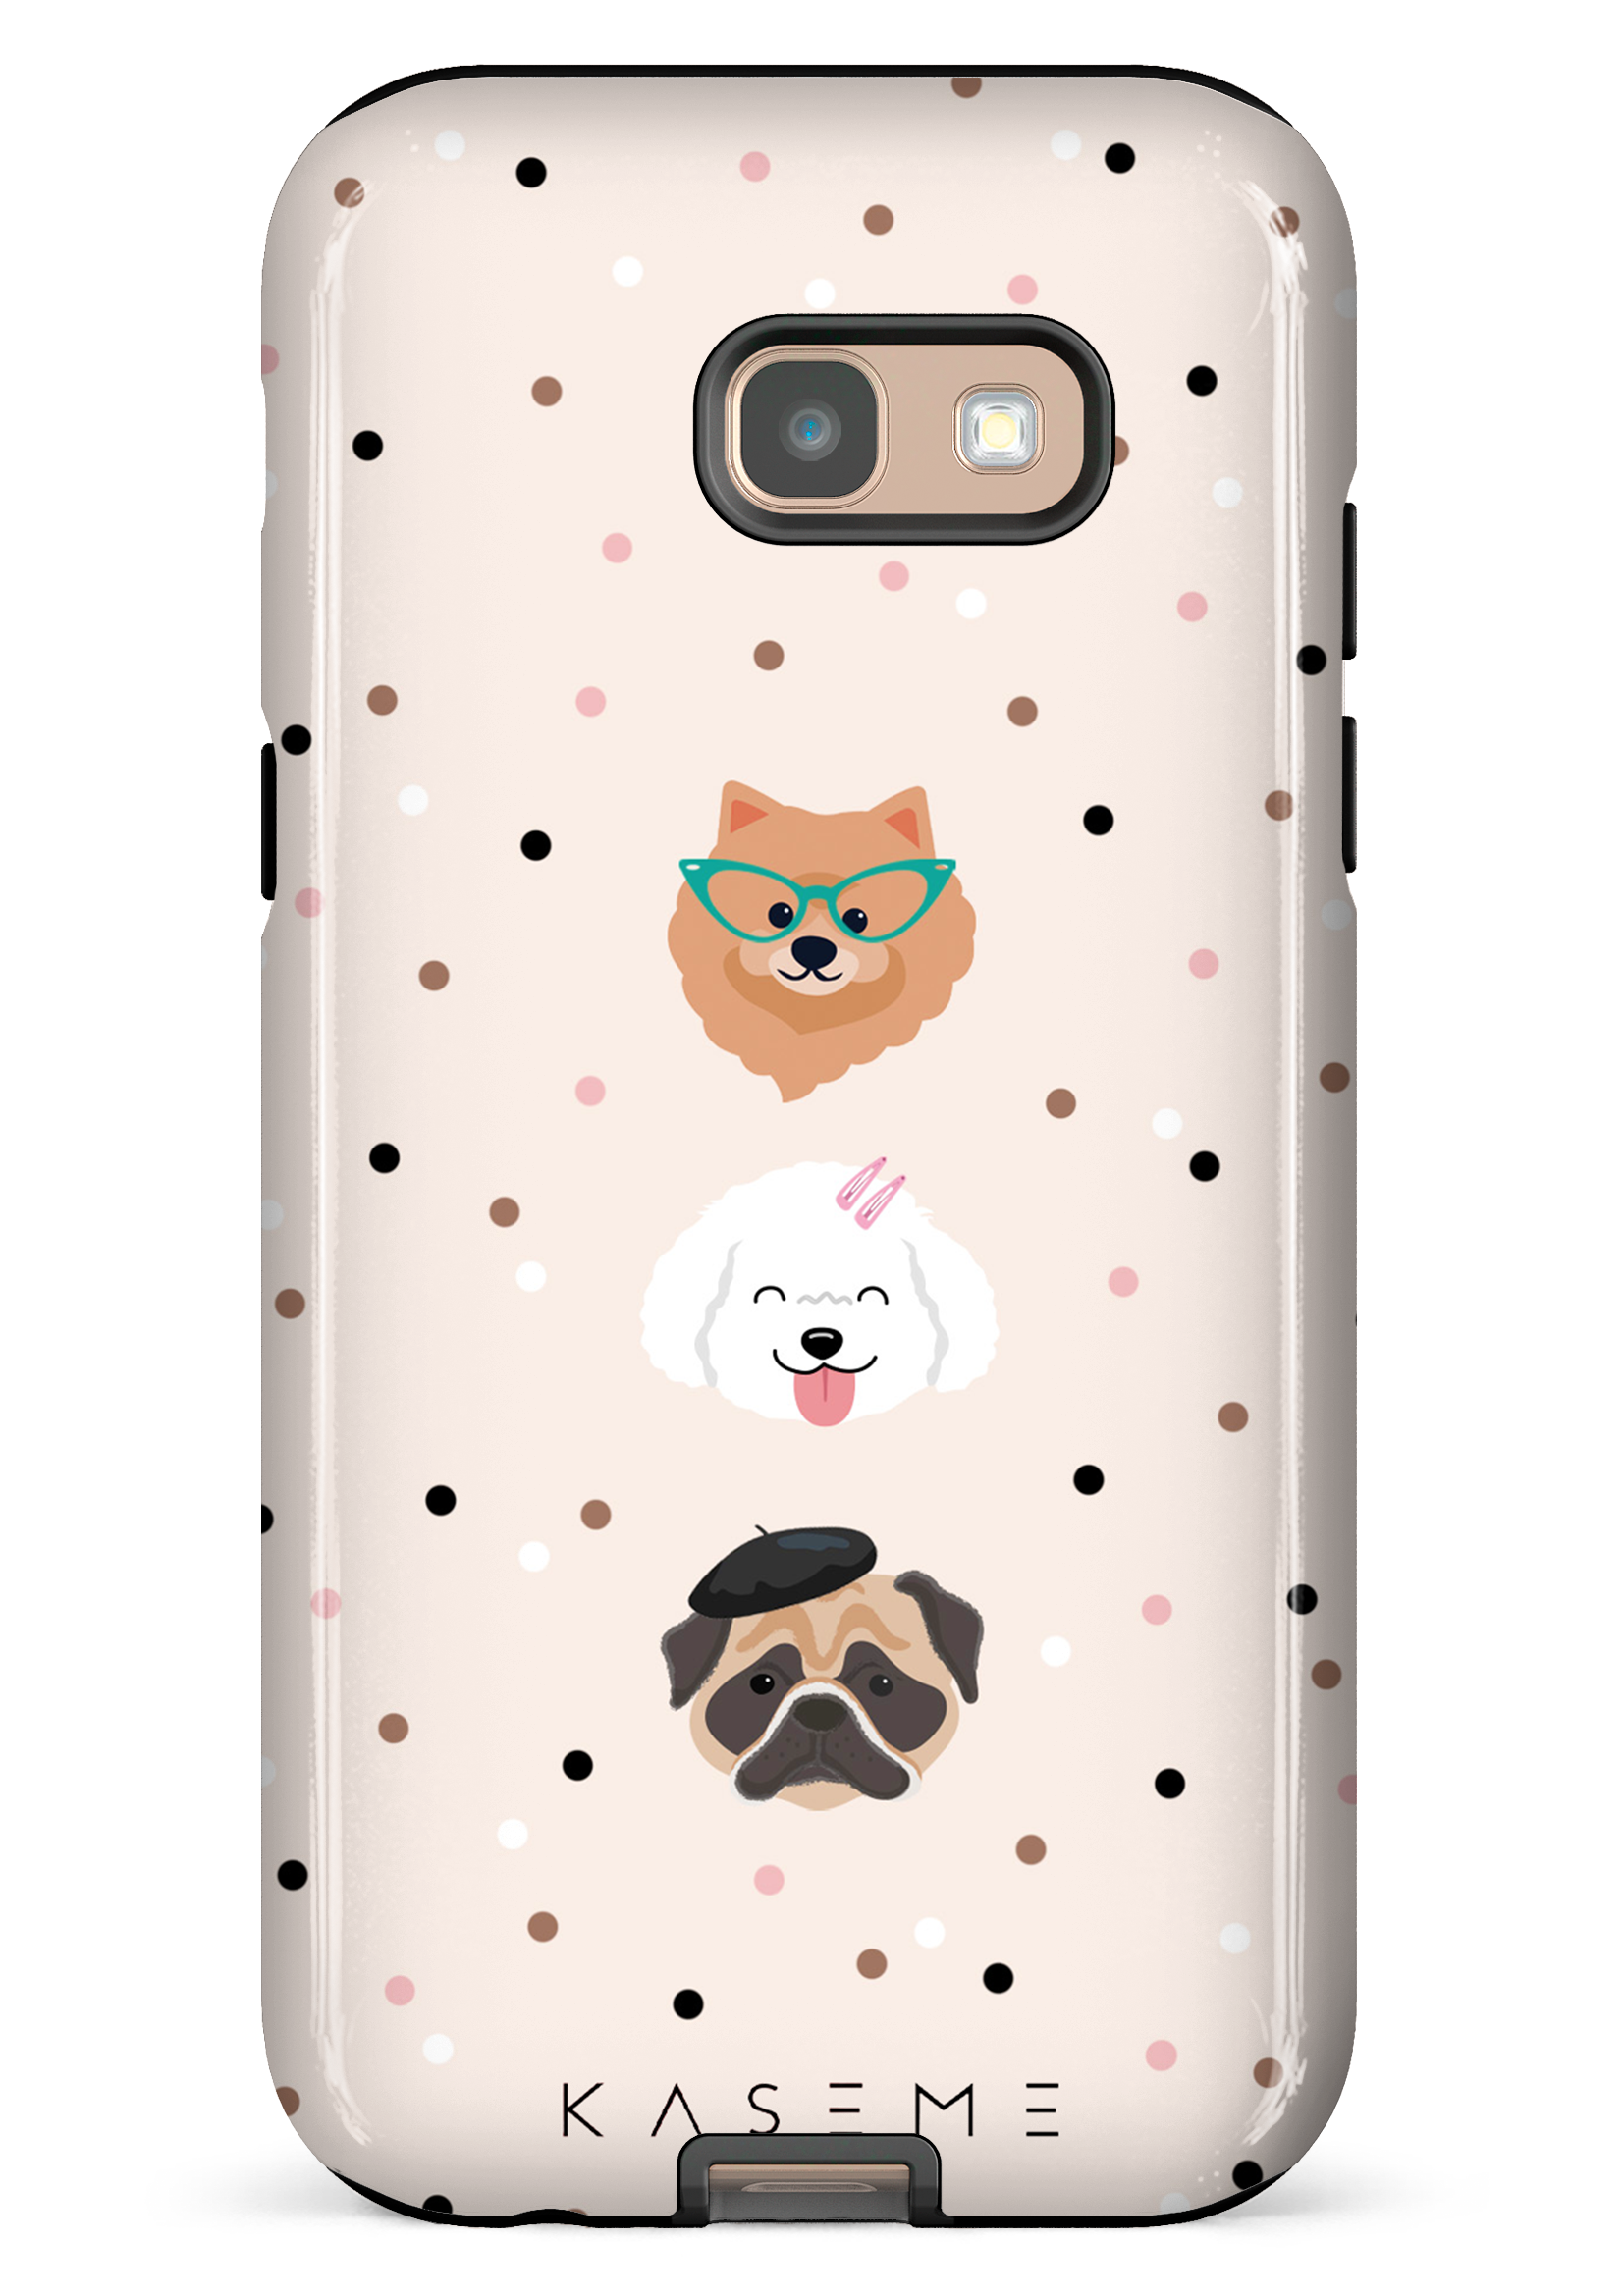 Dog lover by Marina Bastarache x SPCA - Galaxy A5 (2017)